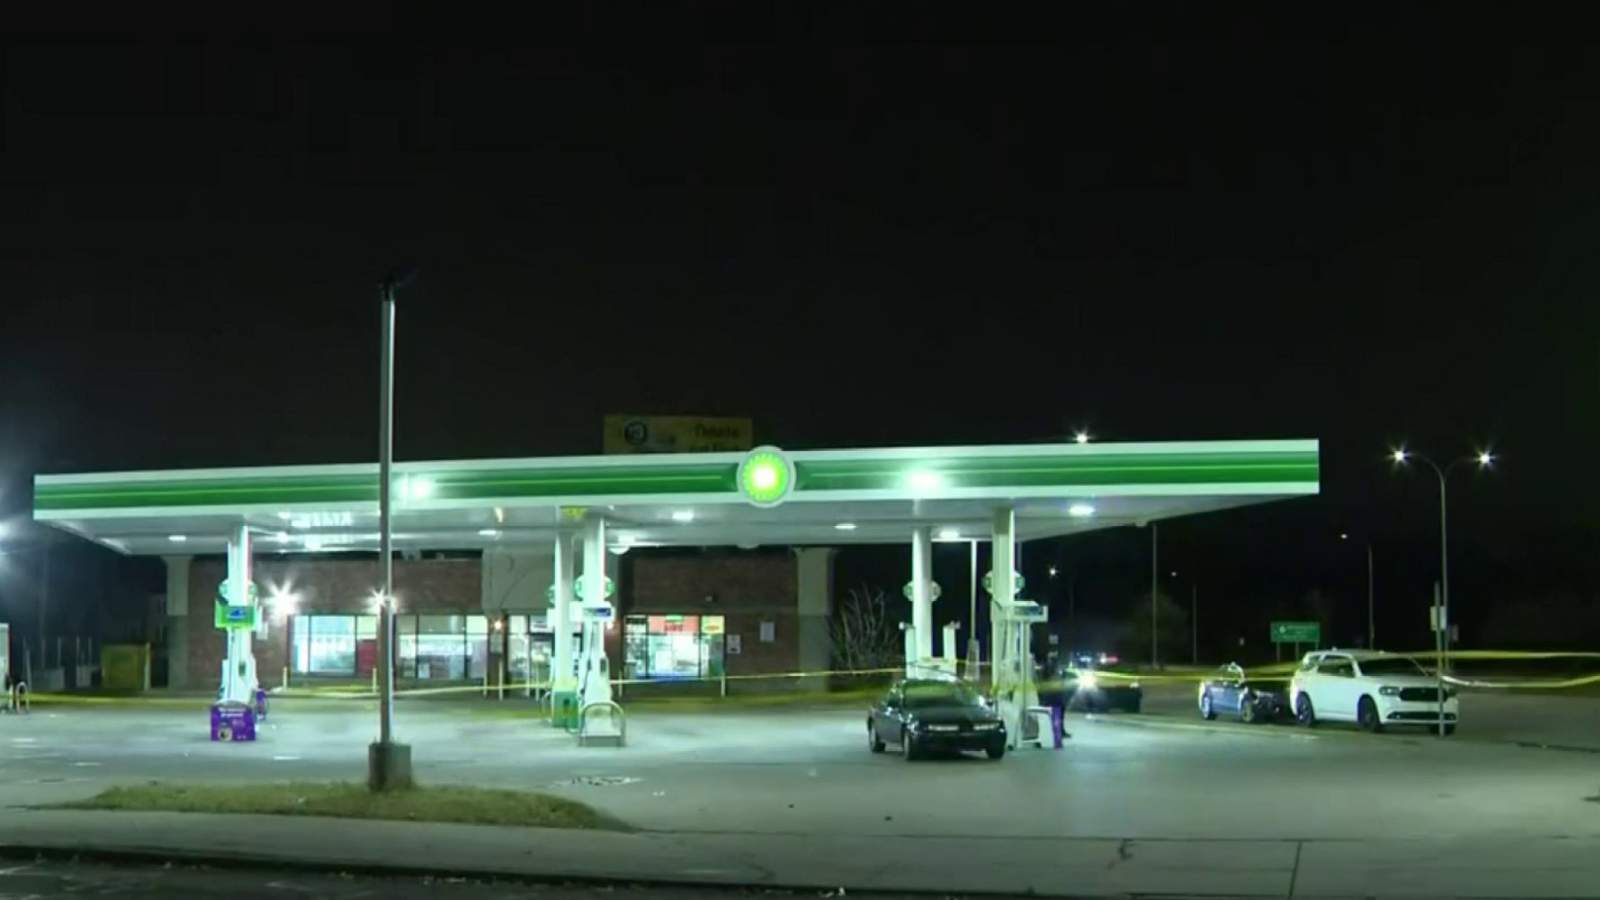 Man killed, woman injured in shooting during meet up to buy skates at Detroit gas station, police say